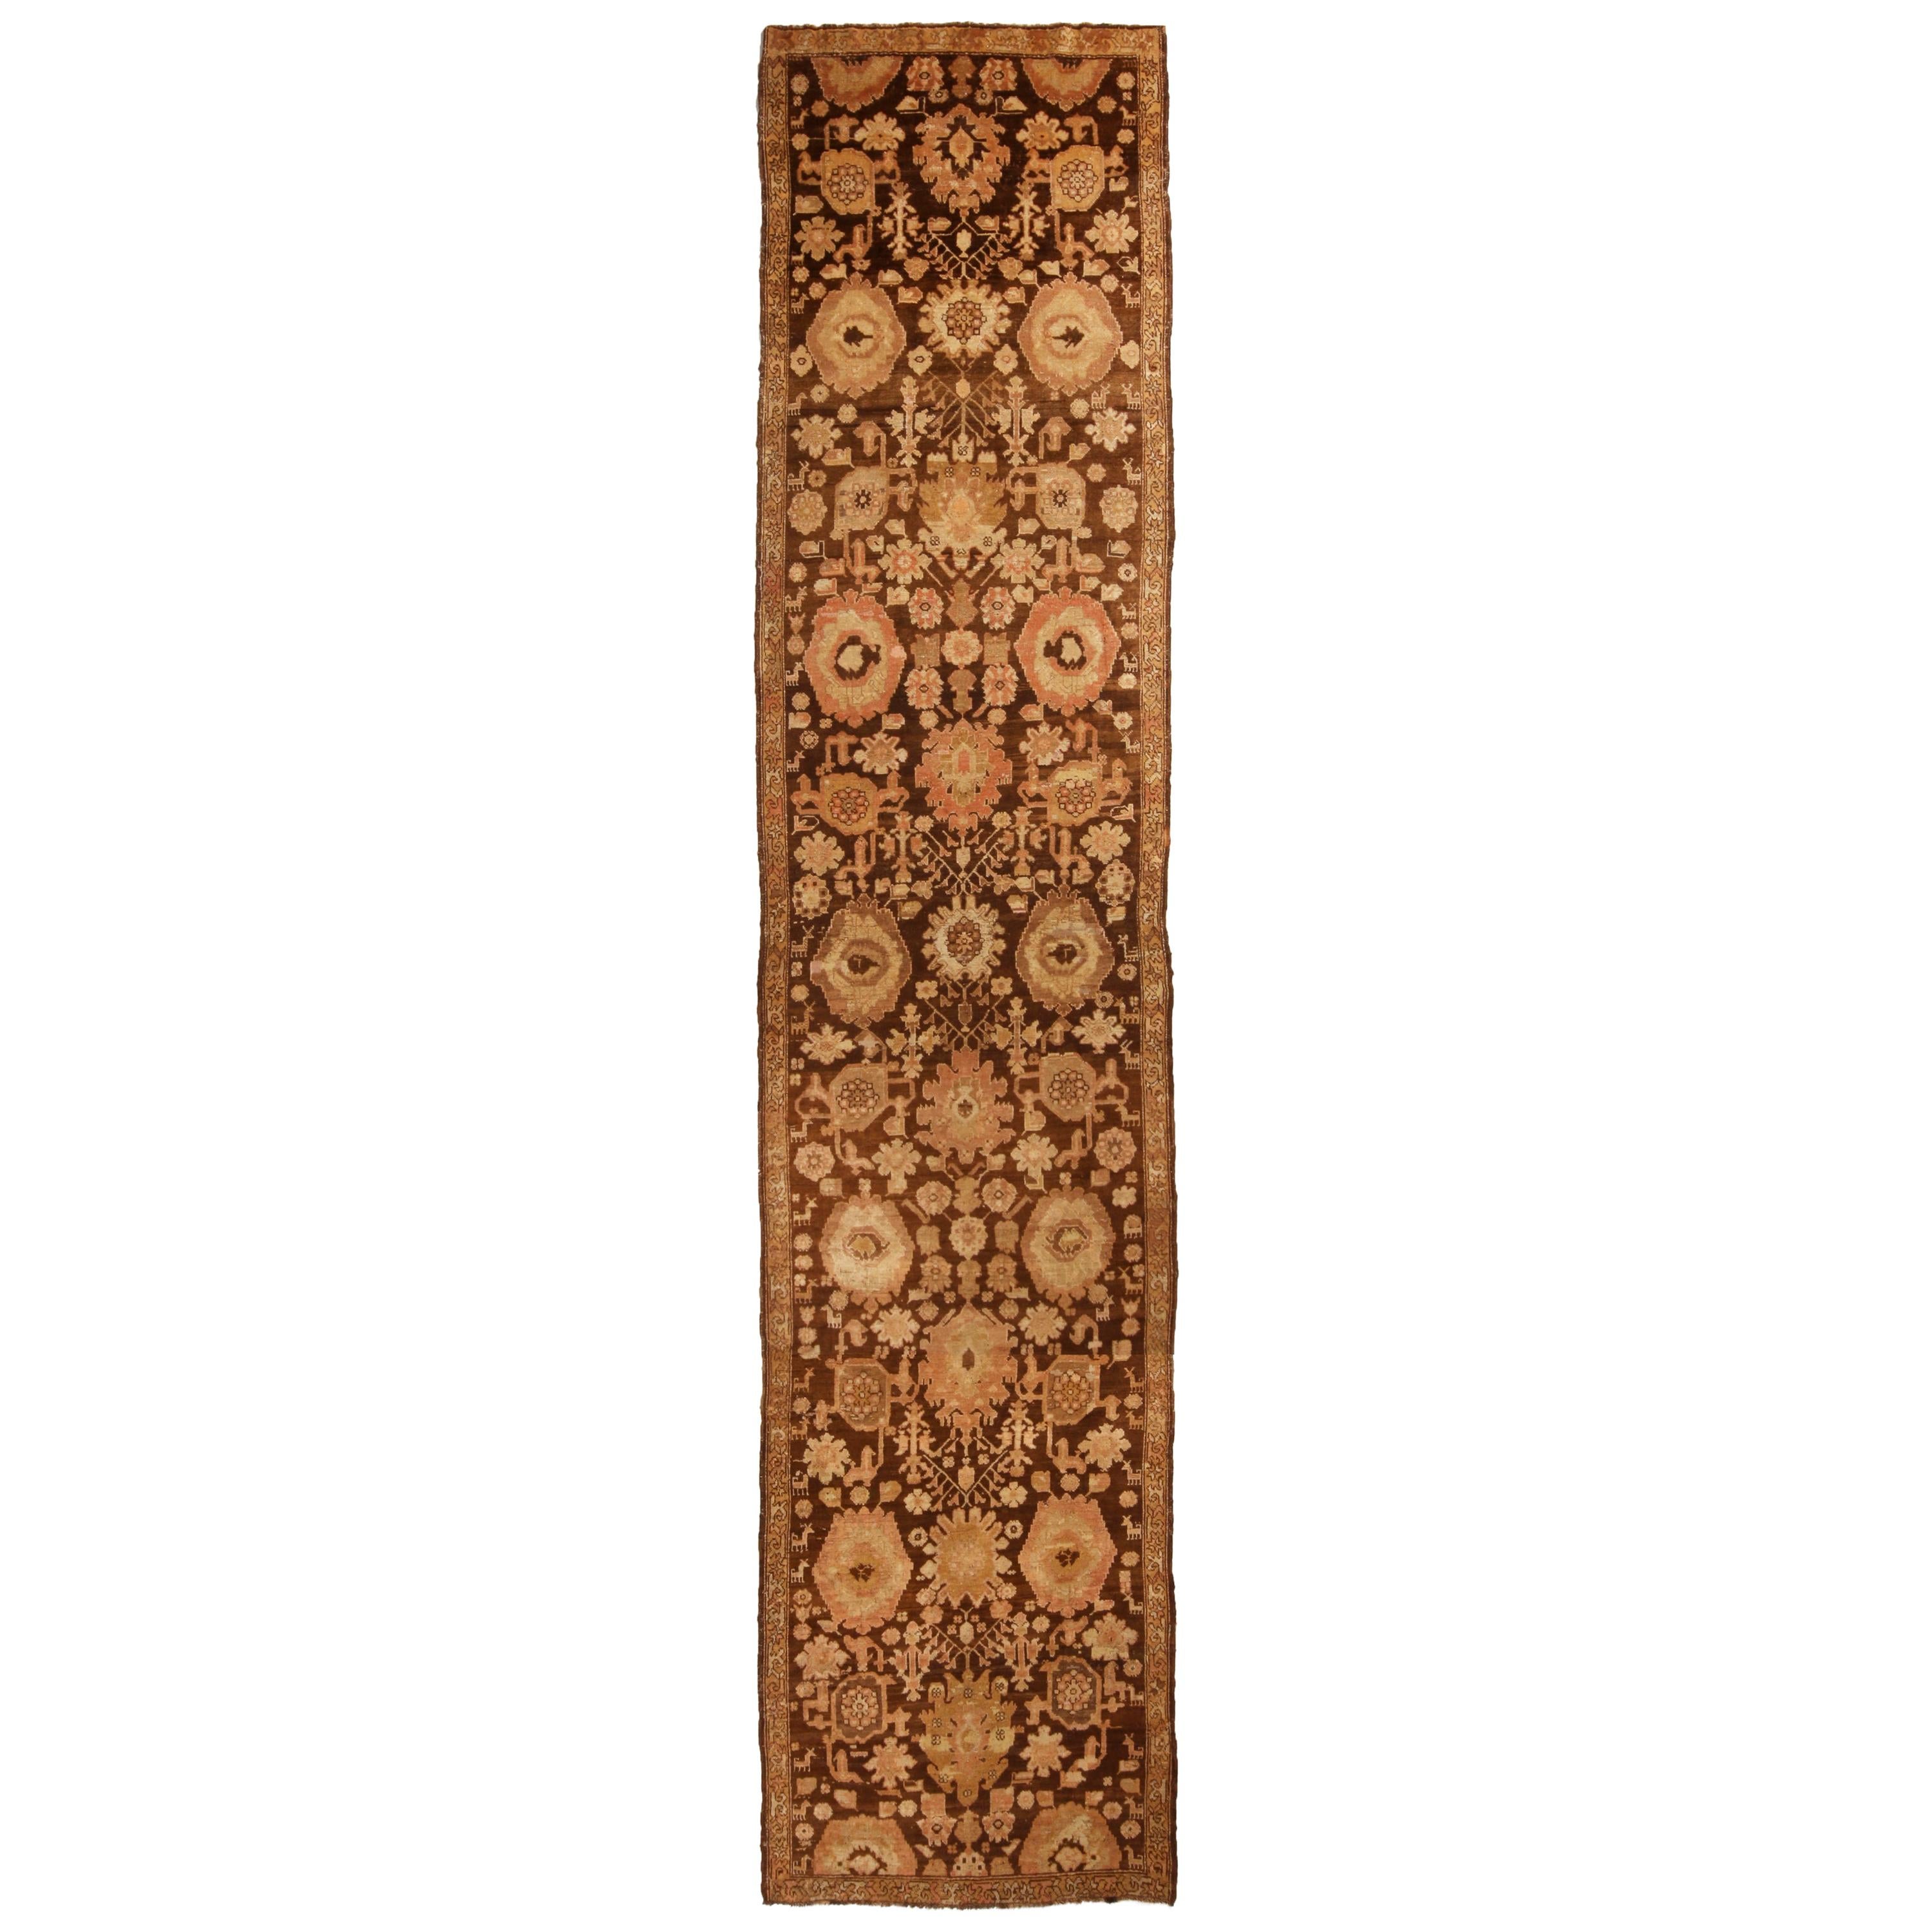 Antique Karabagh Brown and Beige Geometric-Floral Wool Runner